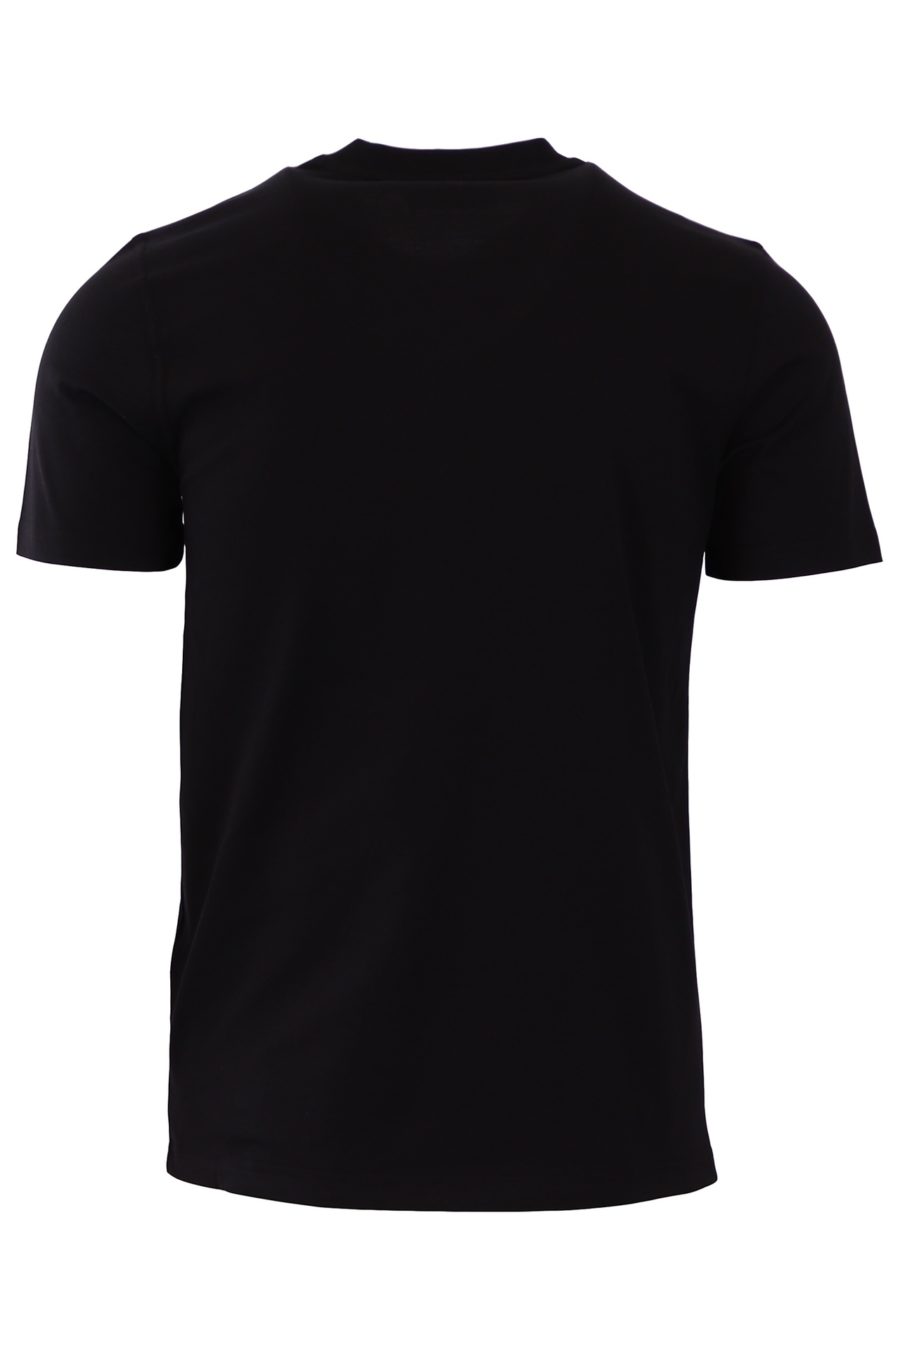 Givenchy T-shirt schwarz slim fit gesticktes Logo - 226615662ae4afde66042db4cc7ae3e6c5a0d9d7